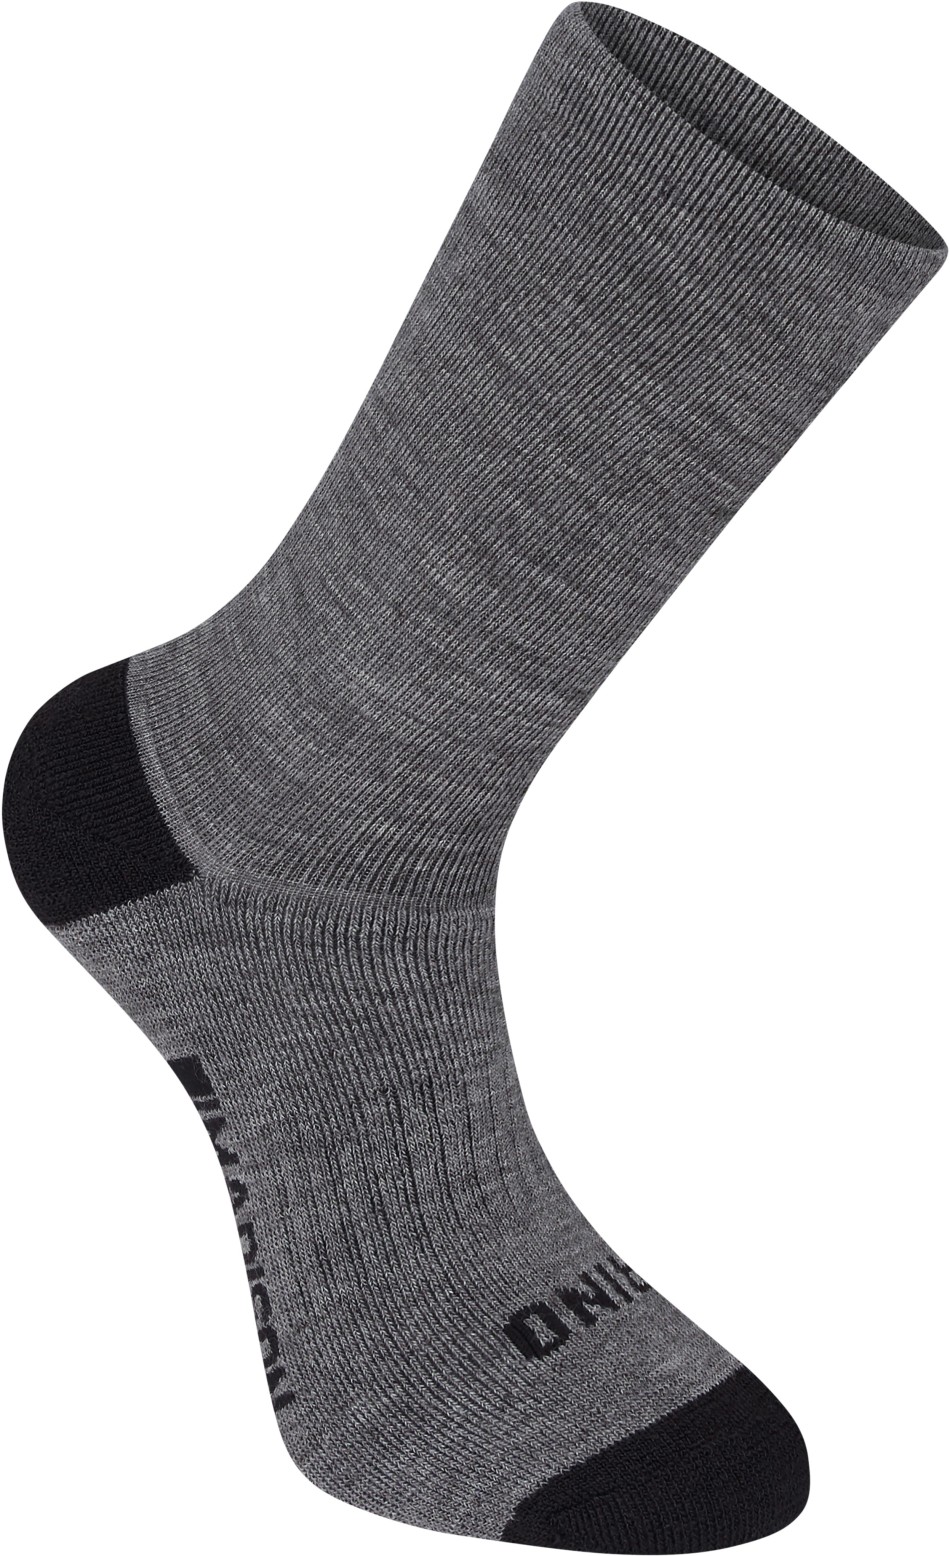 Madison Isoler Deep Winter Socks Grey